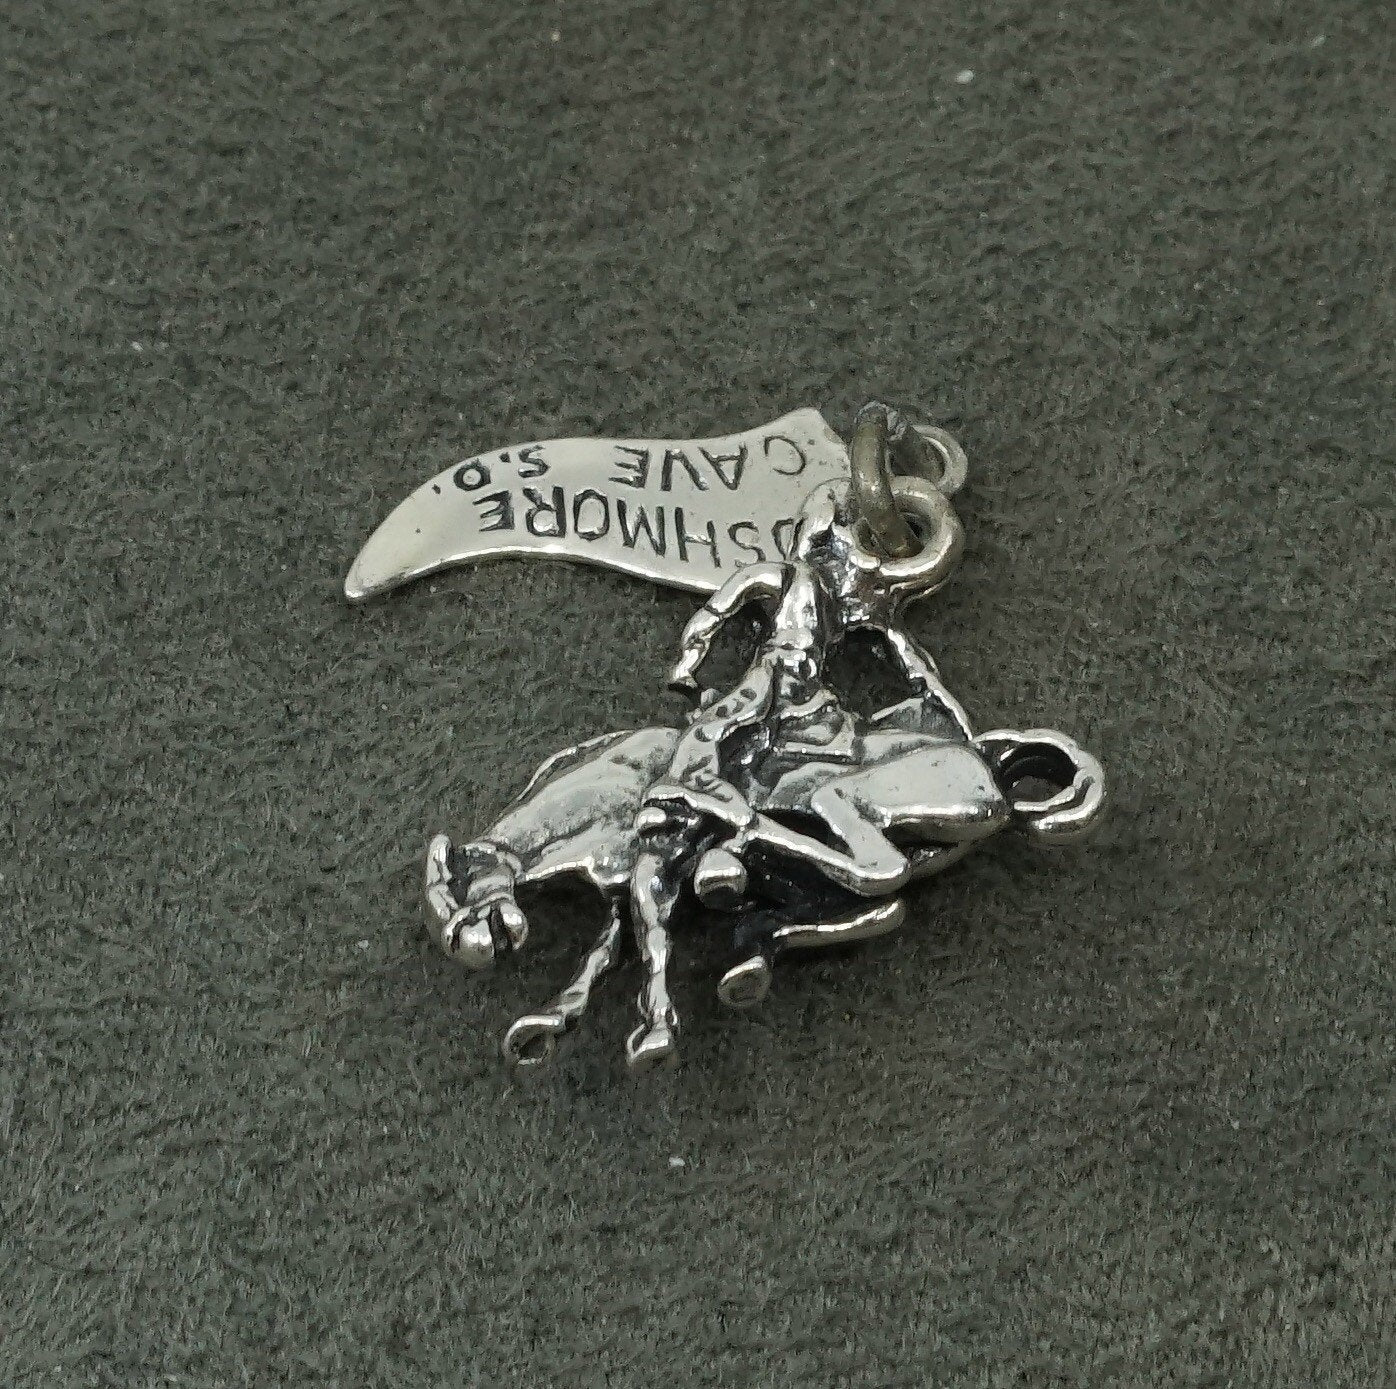 vtg Sterling silver handmade charm, 925 horse pendant P Rushmore cave so